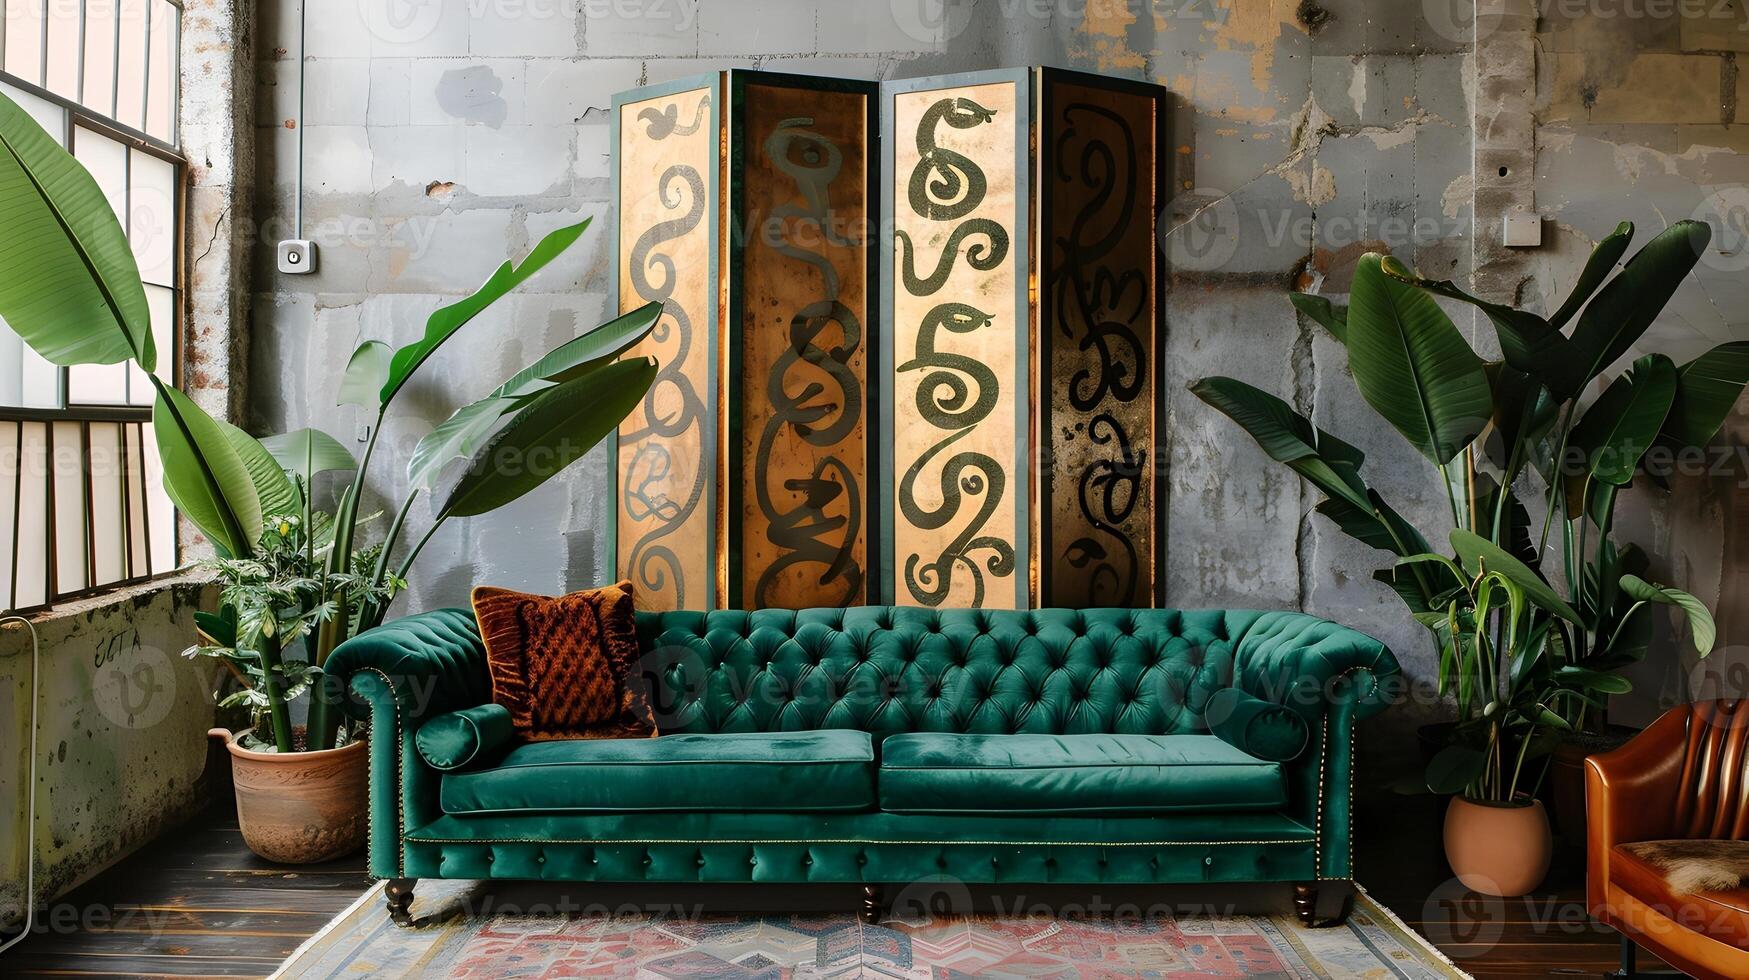 wijnoogst smaragd groen chesterfield sofa siert industrieel zolder ruimte met boho decor en tribal patronen foto